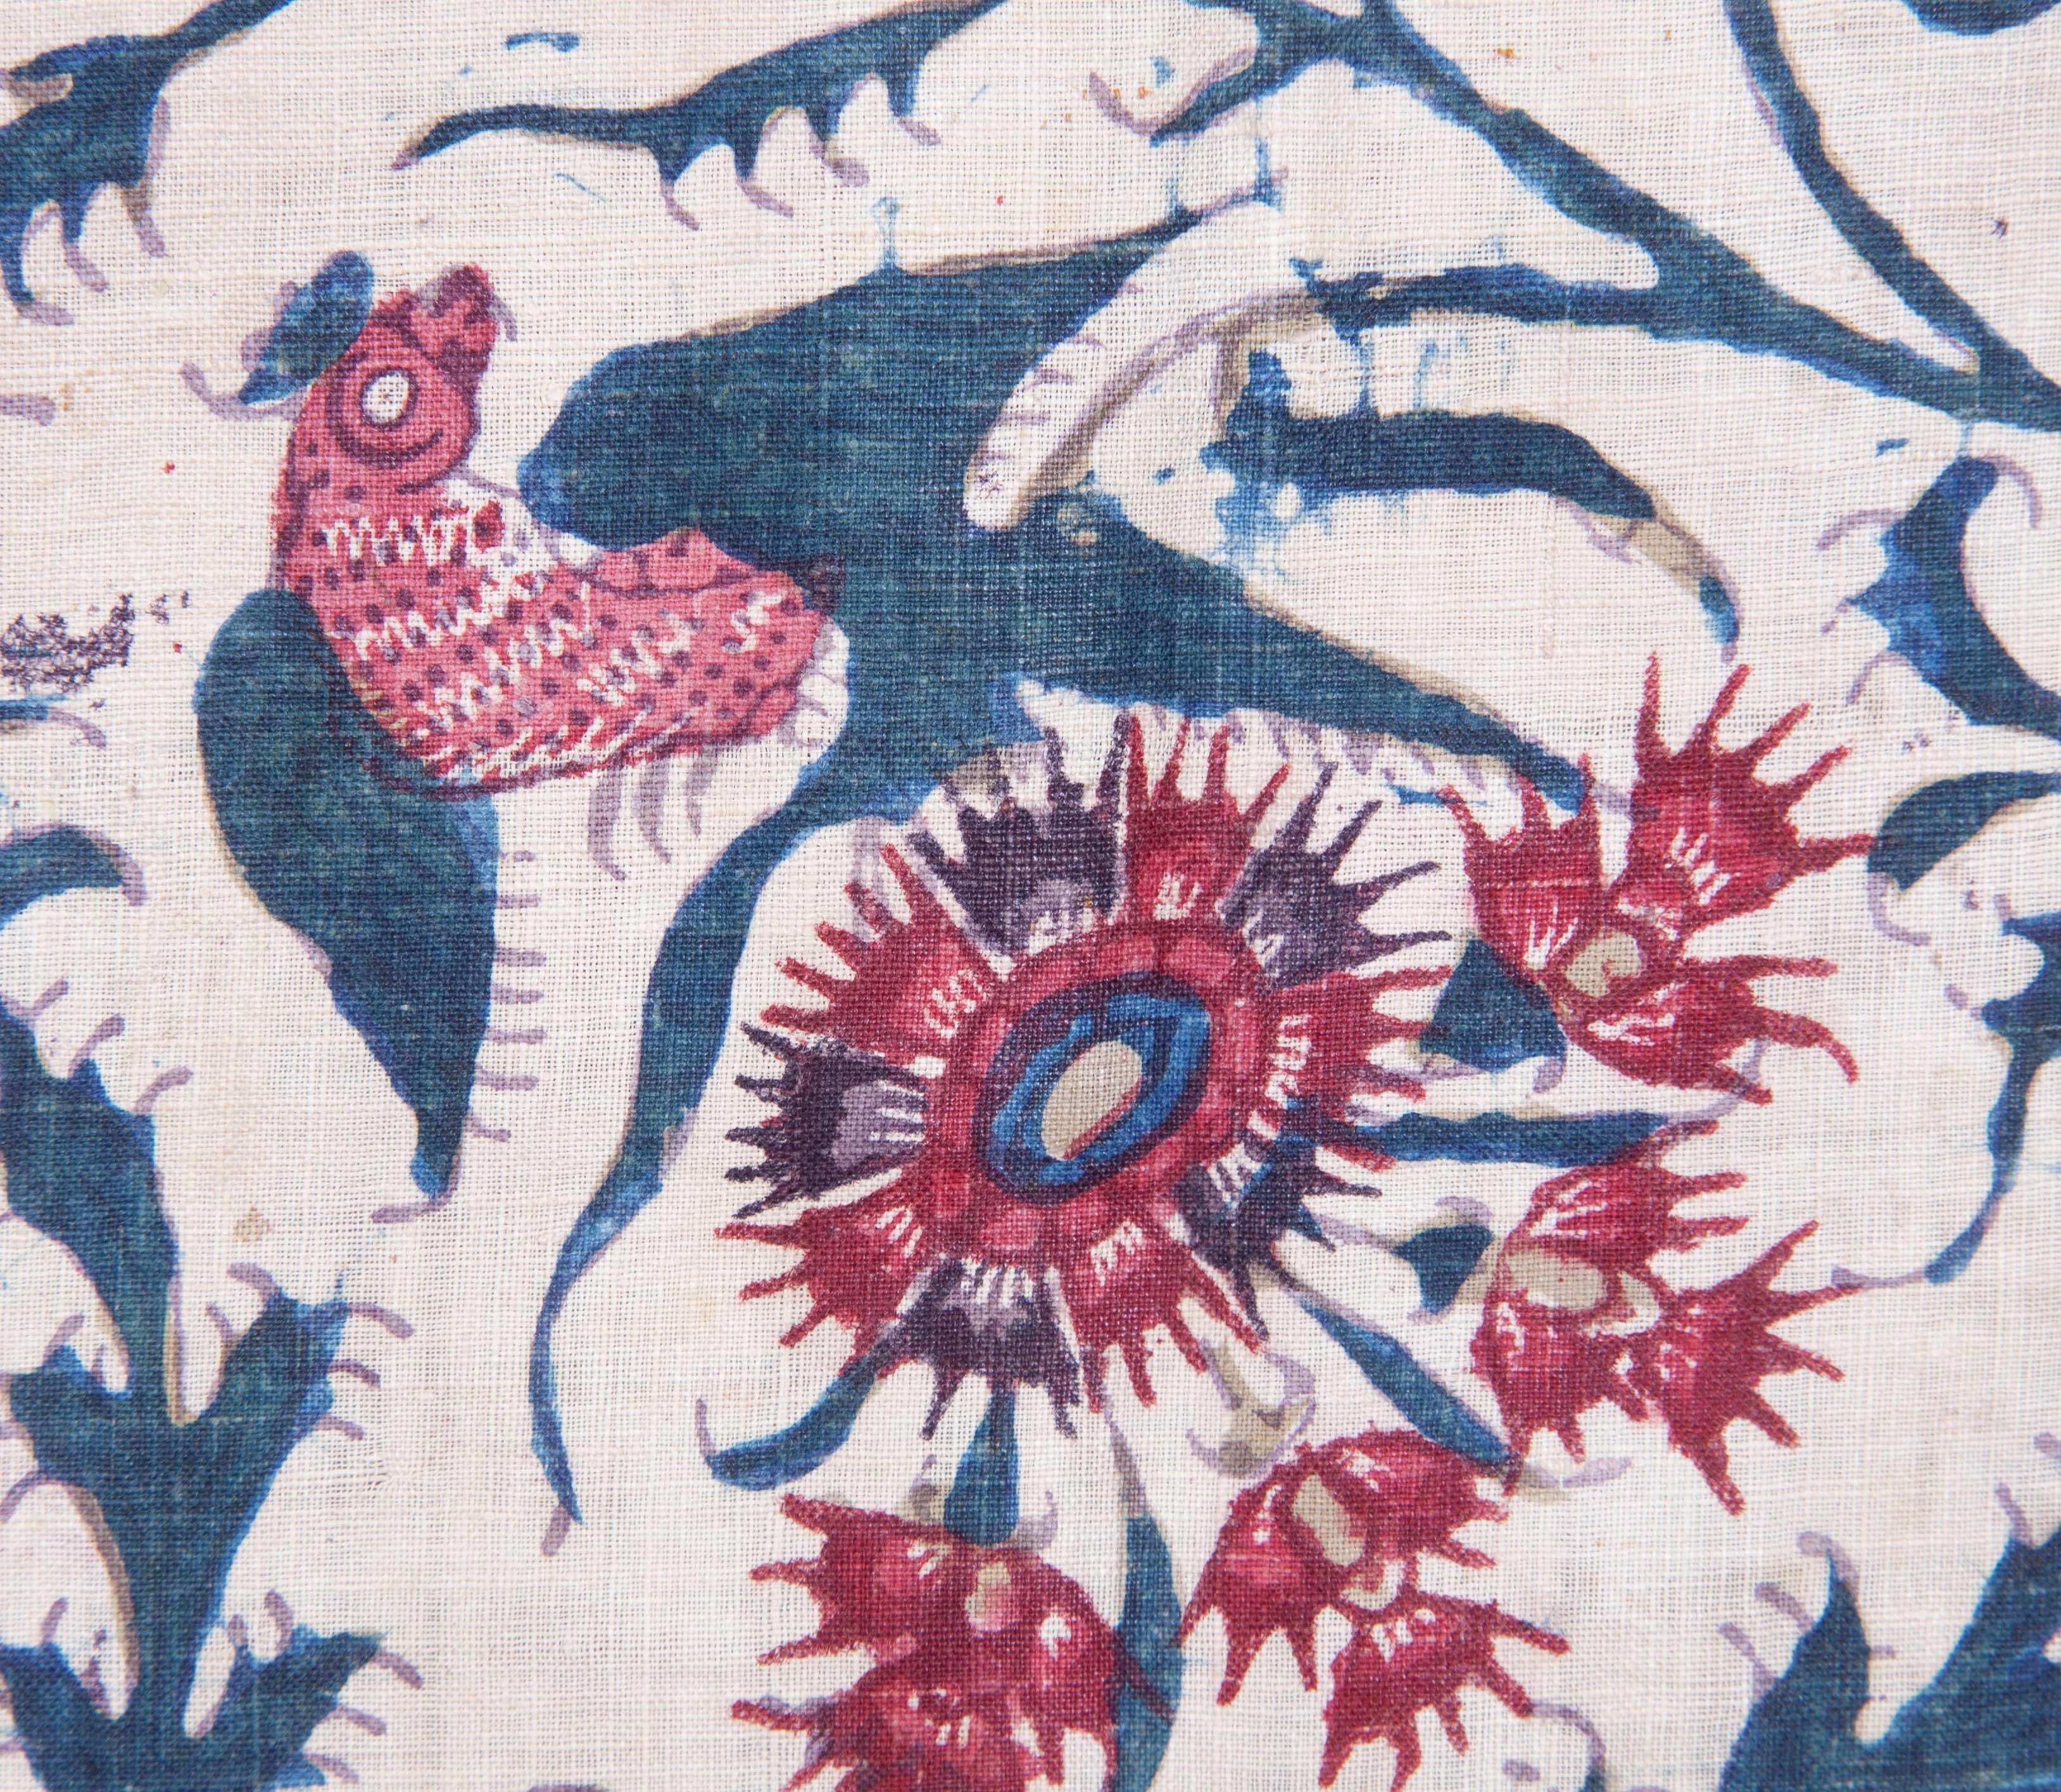 Cotton Qalamkar Panel from India, Mid-19th Century